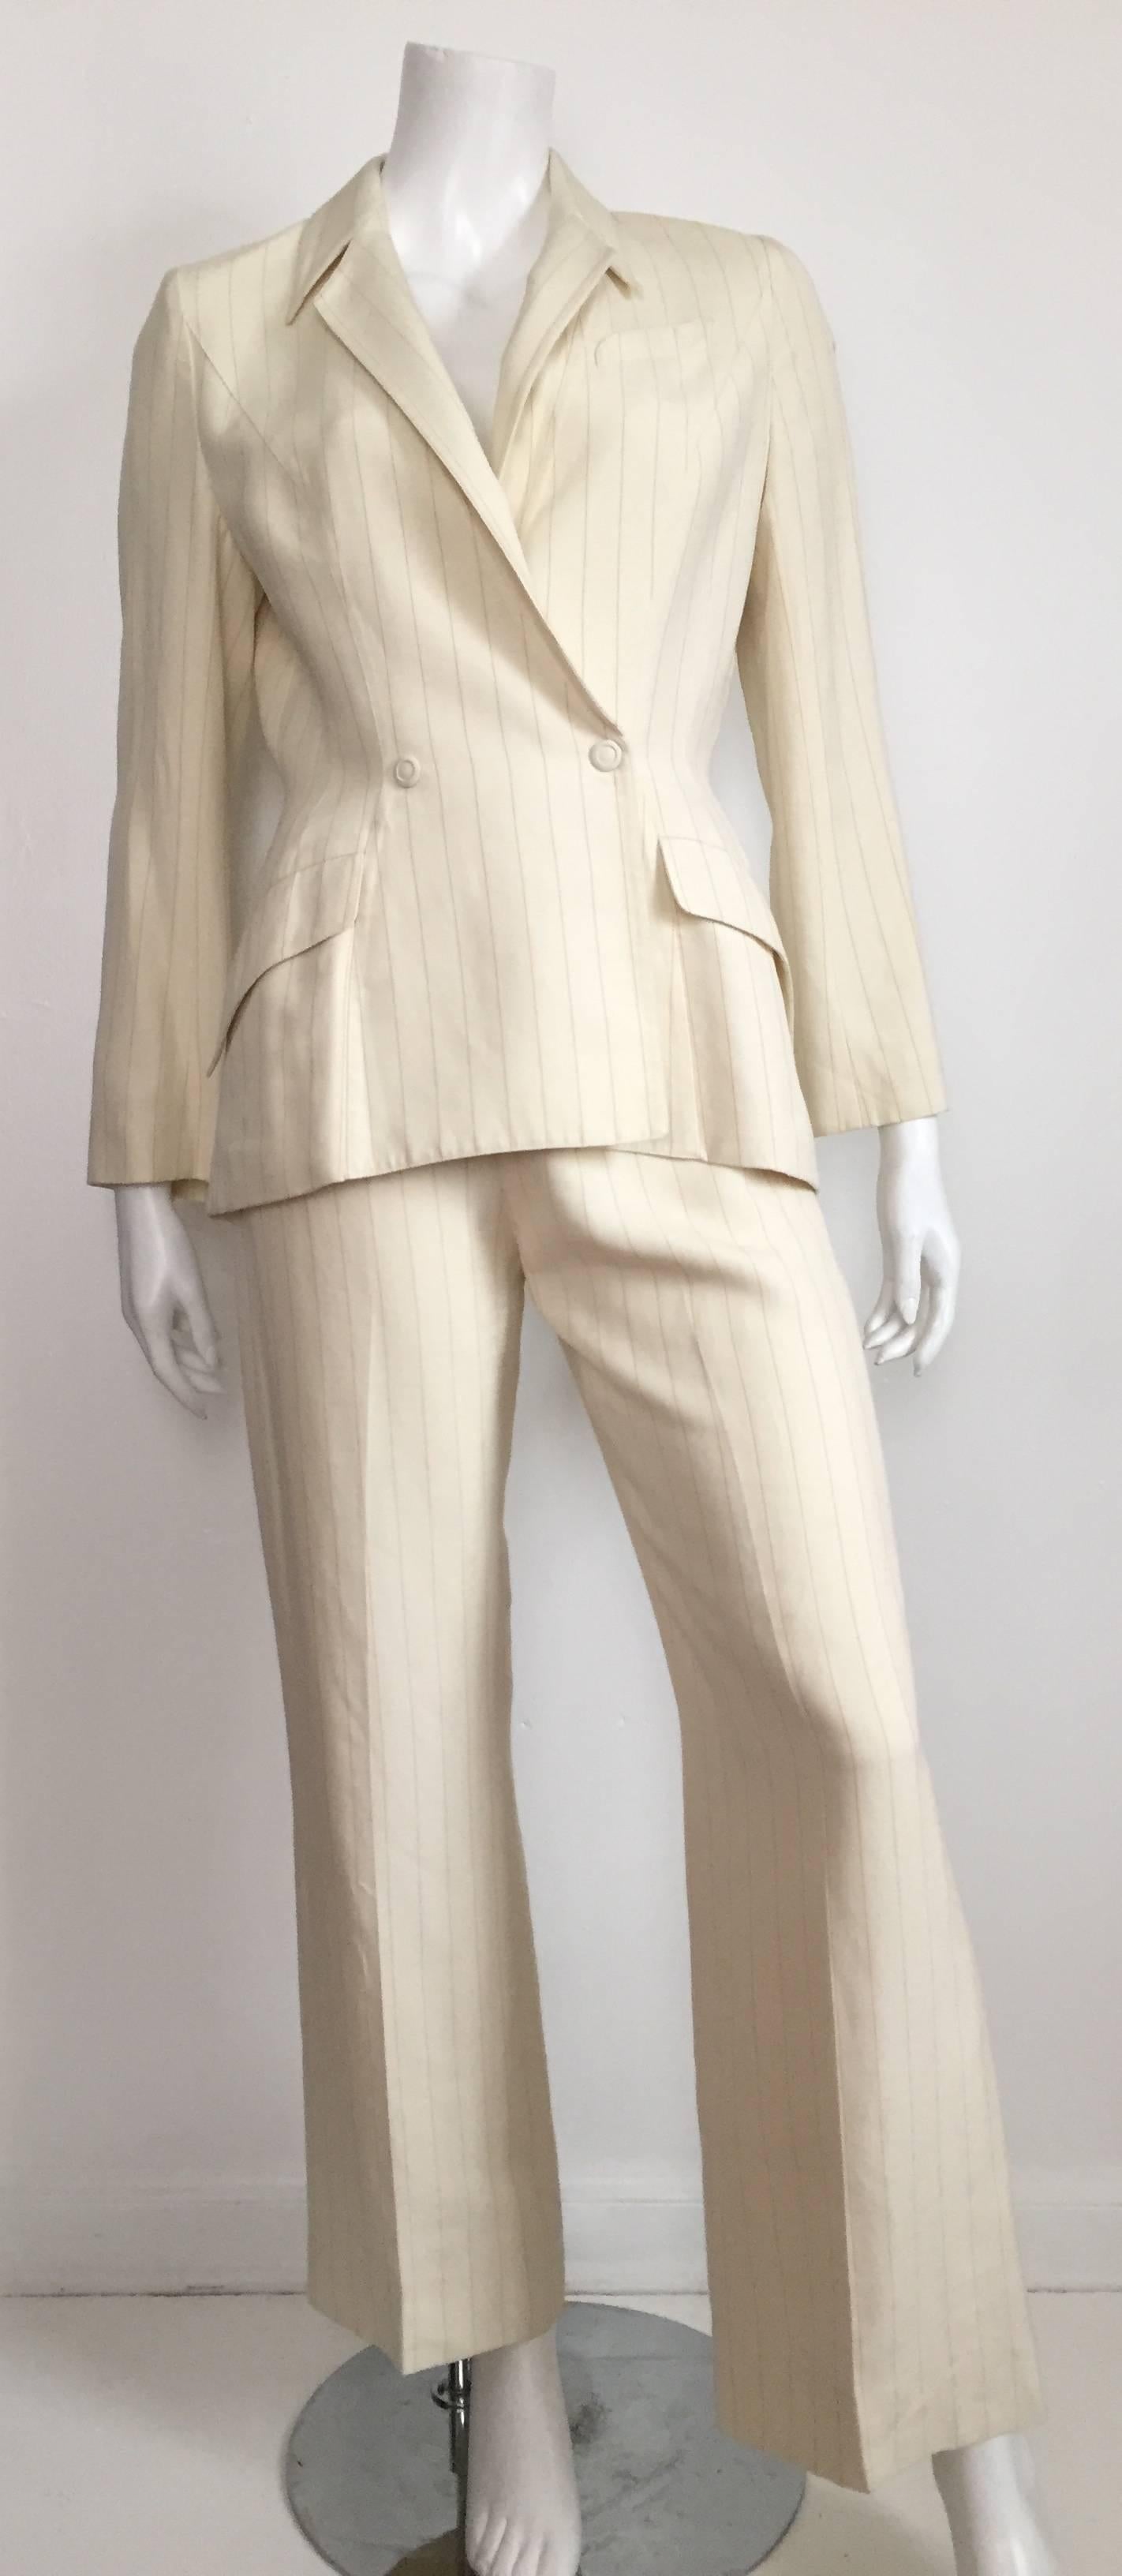 Thierry Mugler Striped Cream Linen Suit, Size 6  5